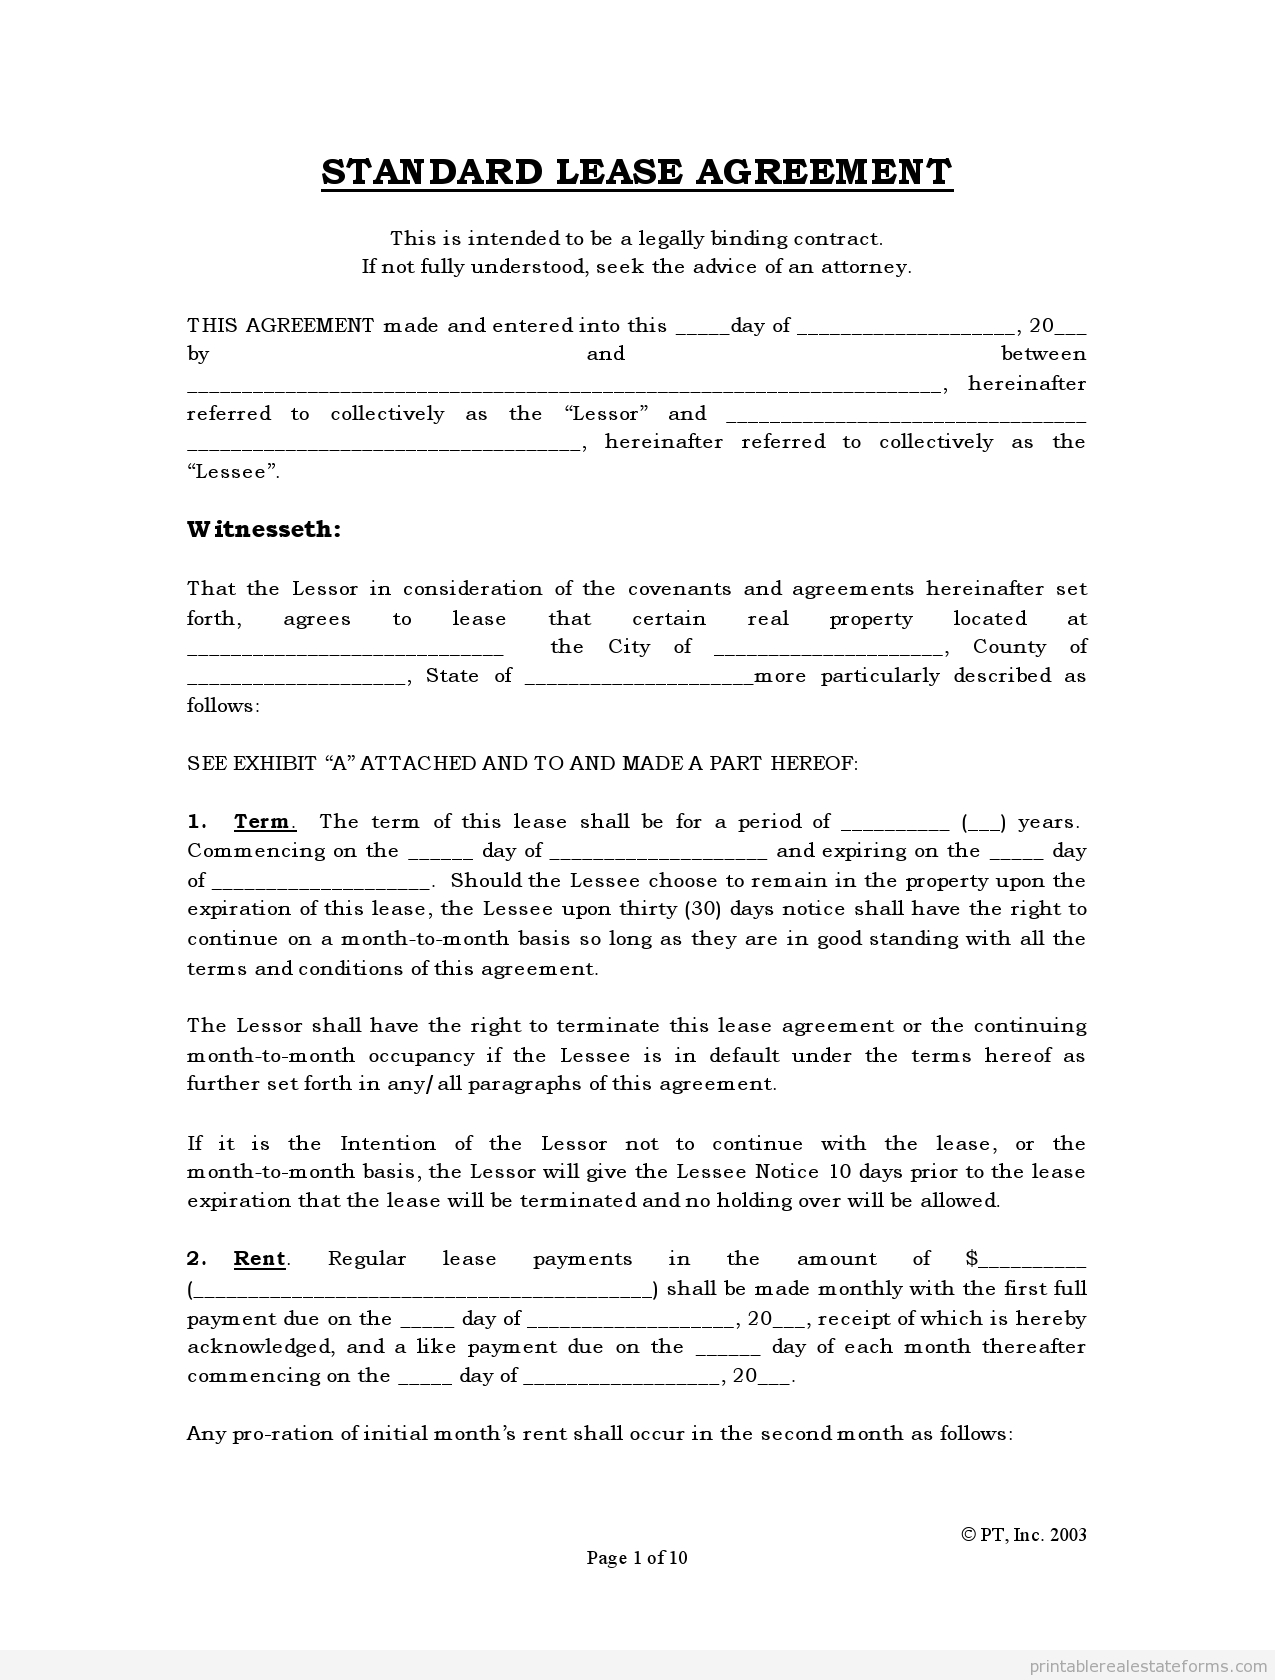 Free Rental Agreements To Print | Free Standard Lease Agreement Form - Rental Agreement Forms Free Printable